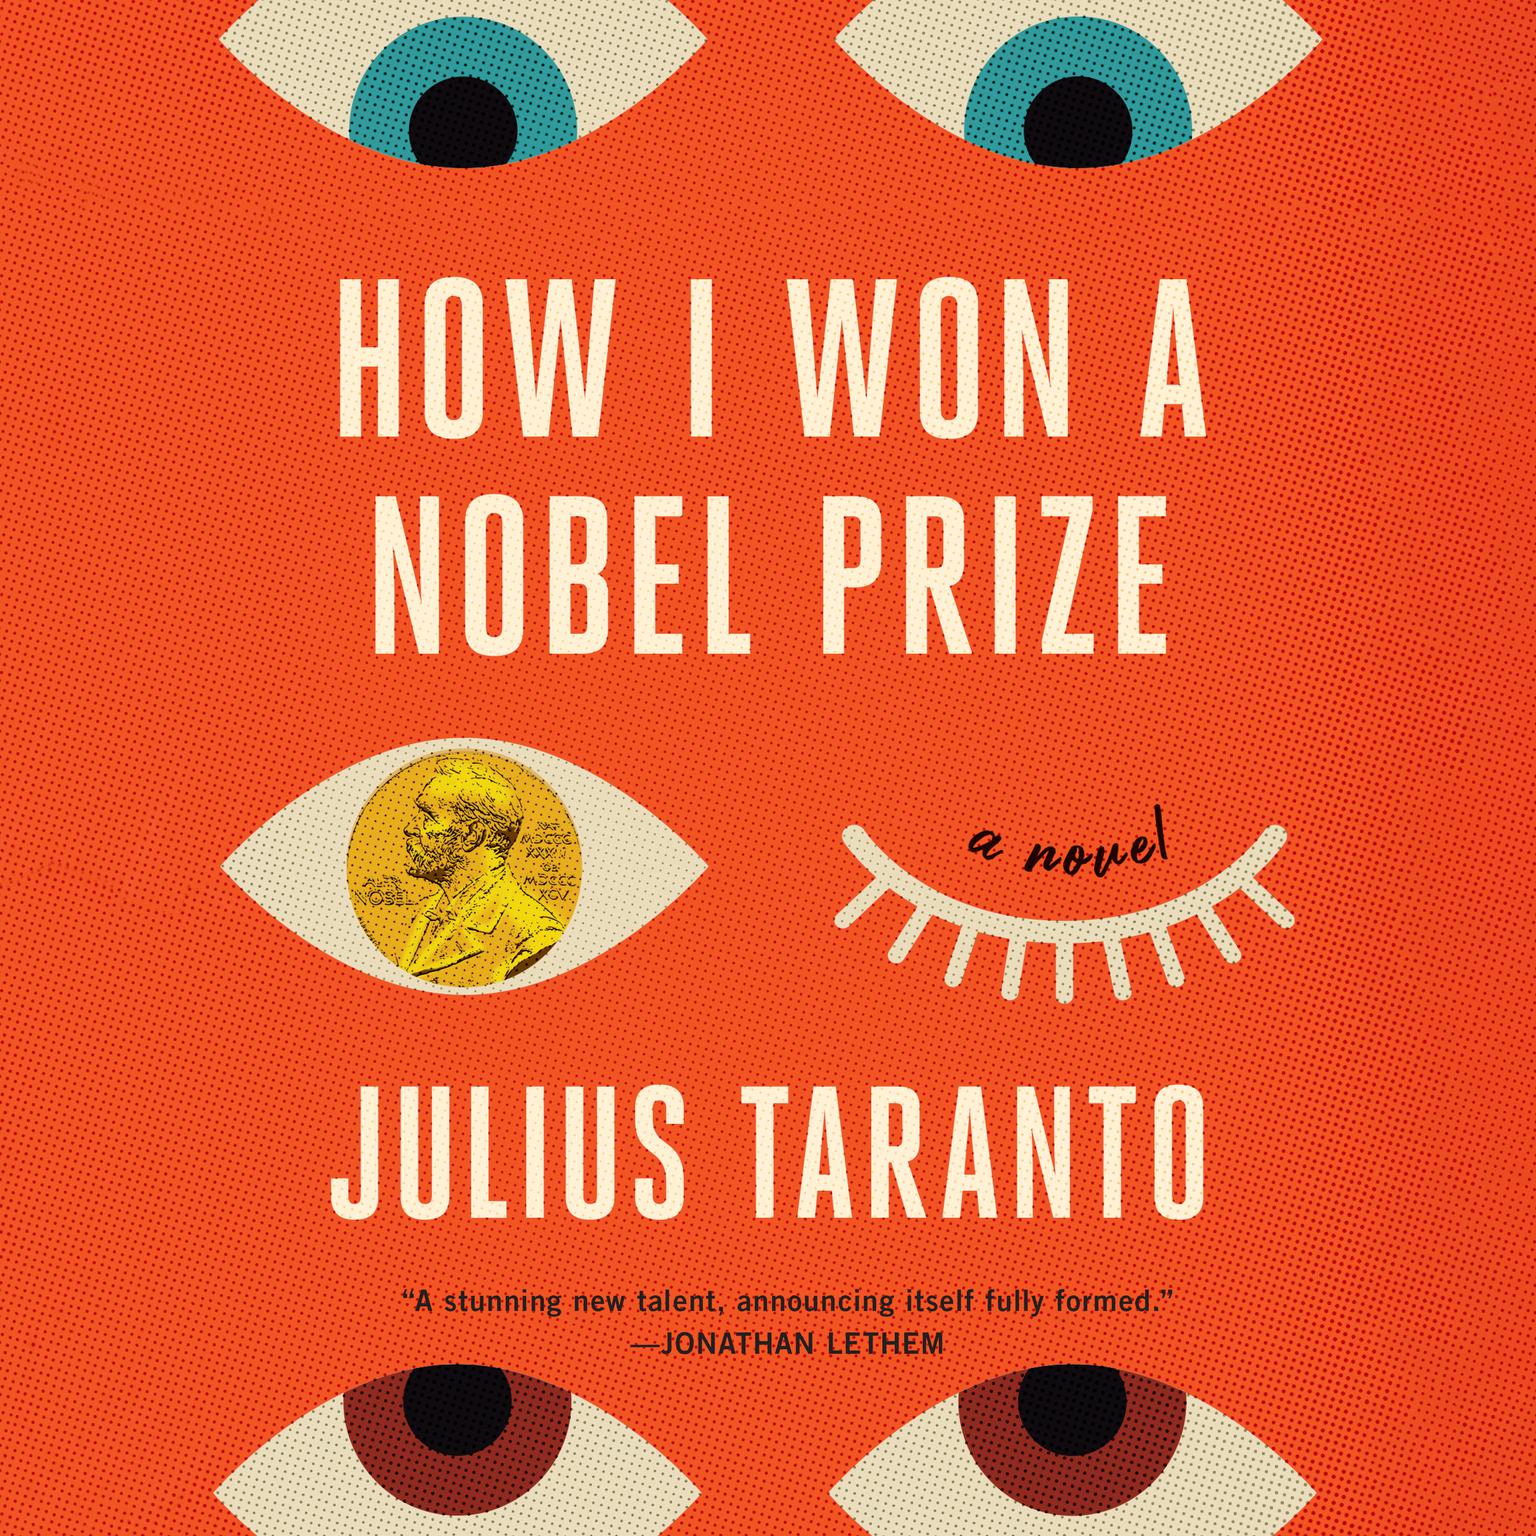 How I Won a Nobel Prize: A Novel Audiobook, by Julius Taranto